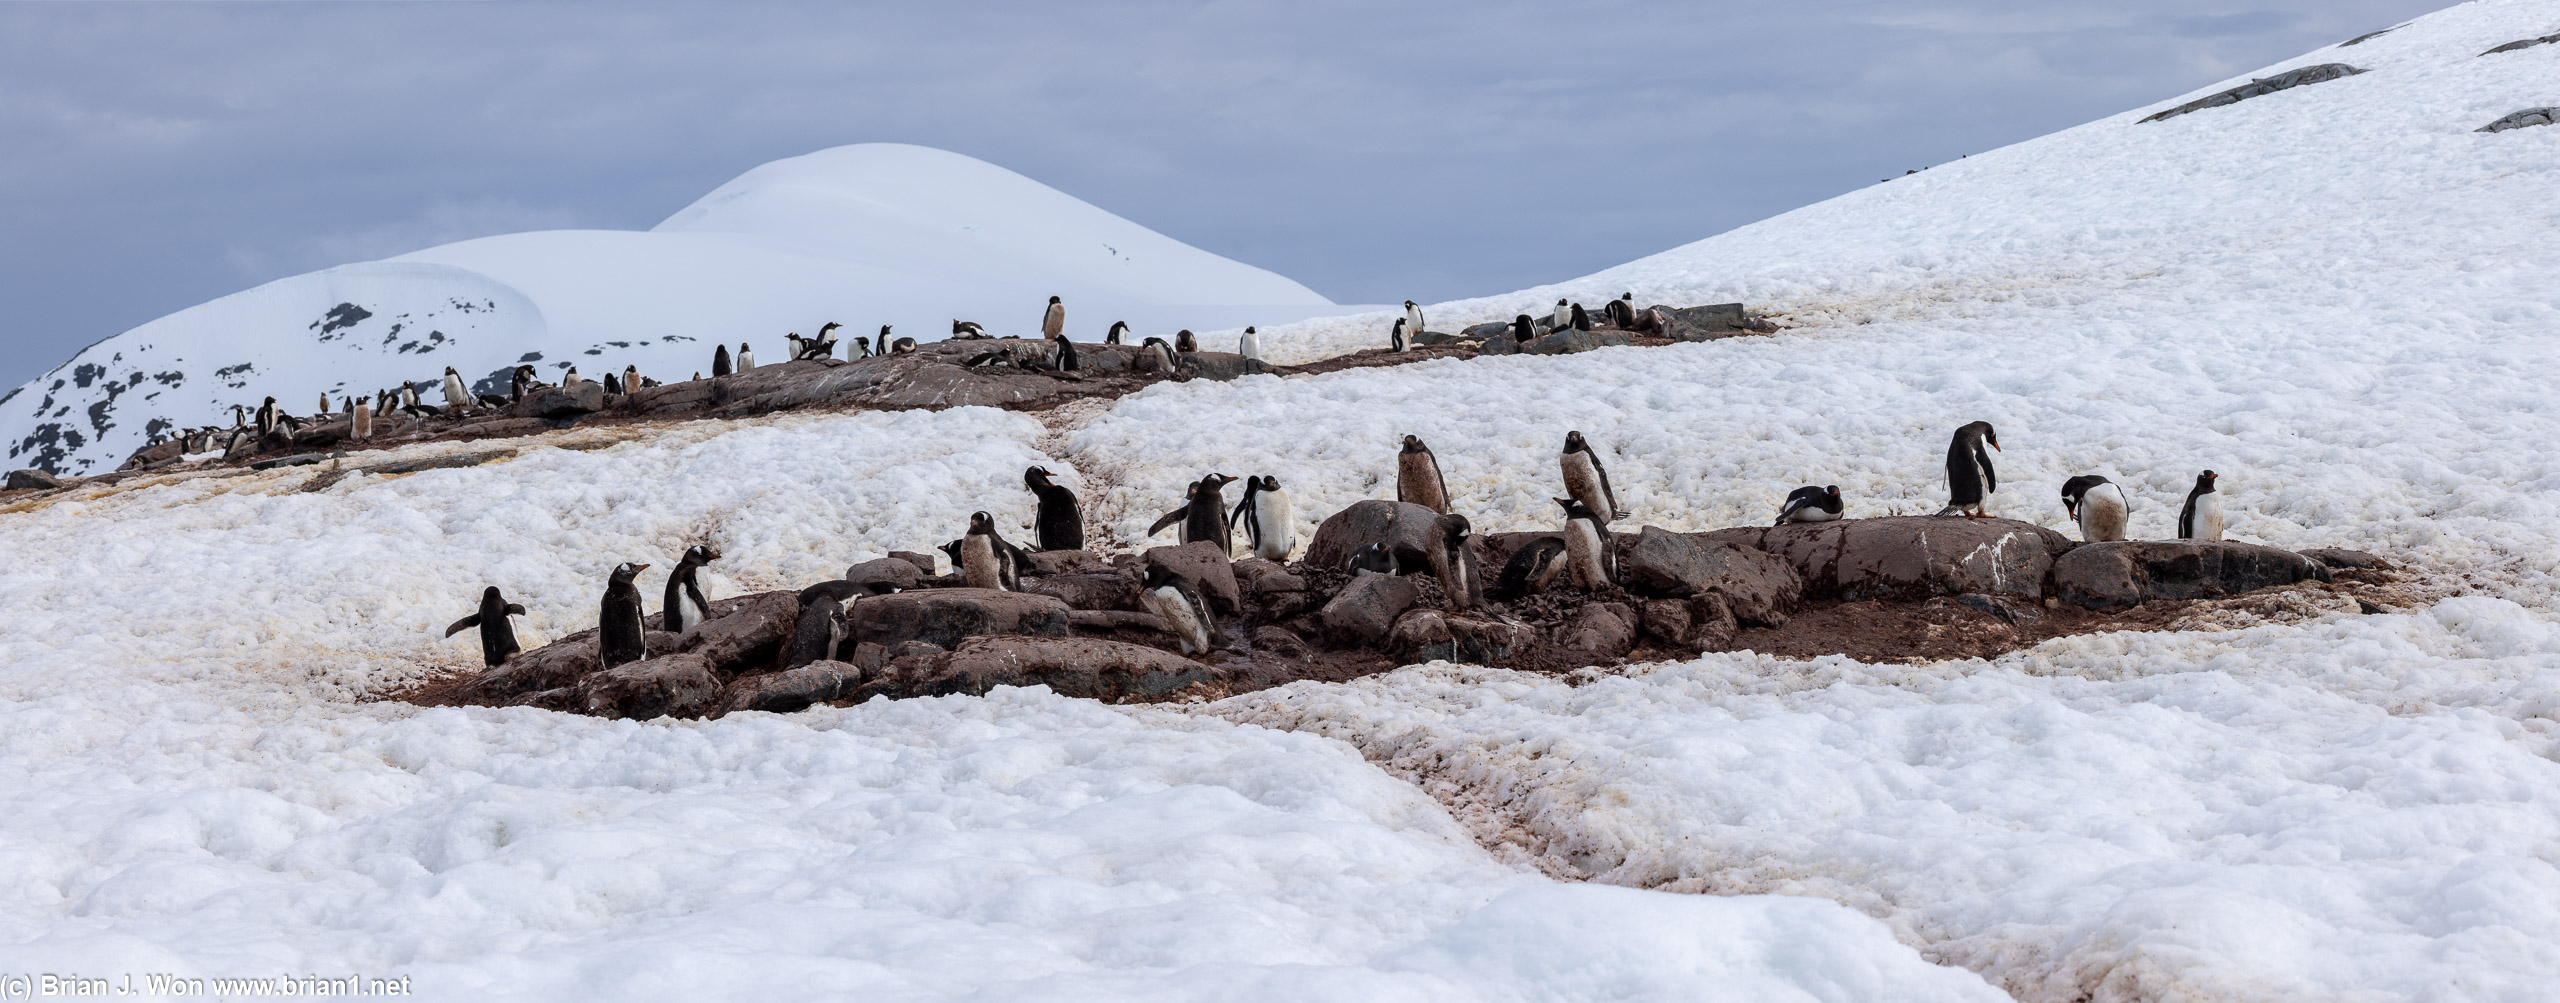 Gentoo penguins everywhere.